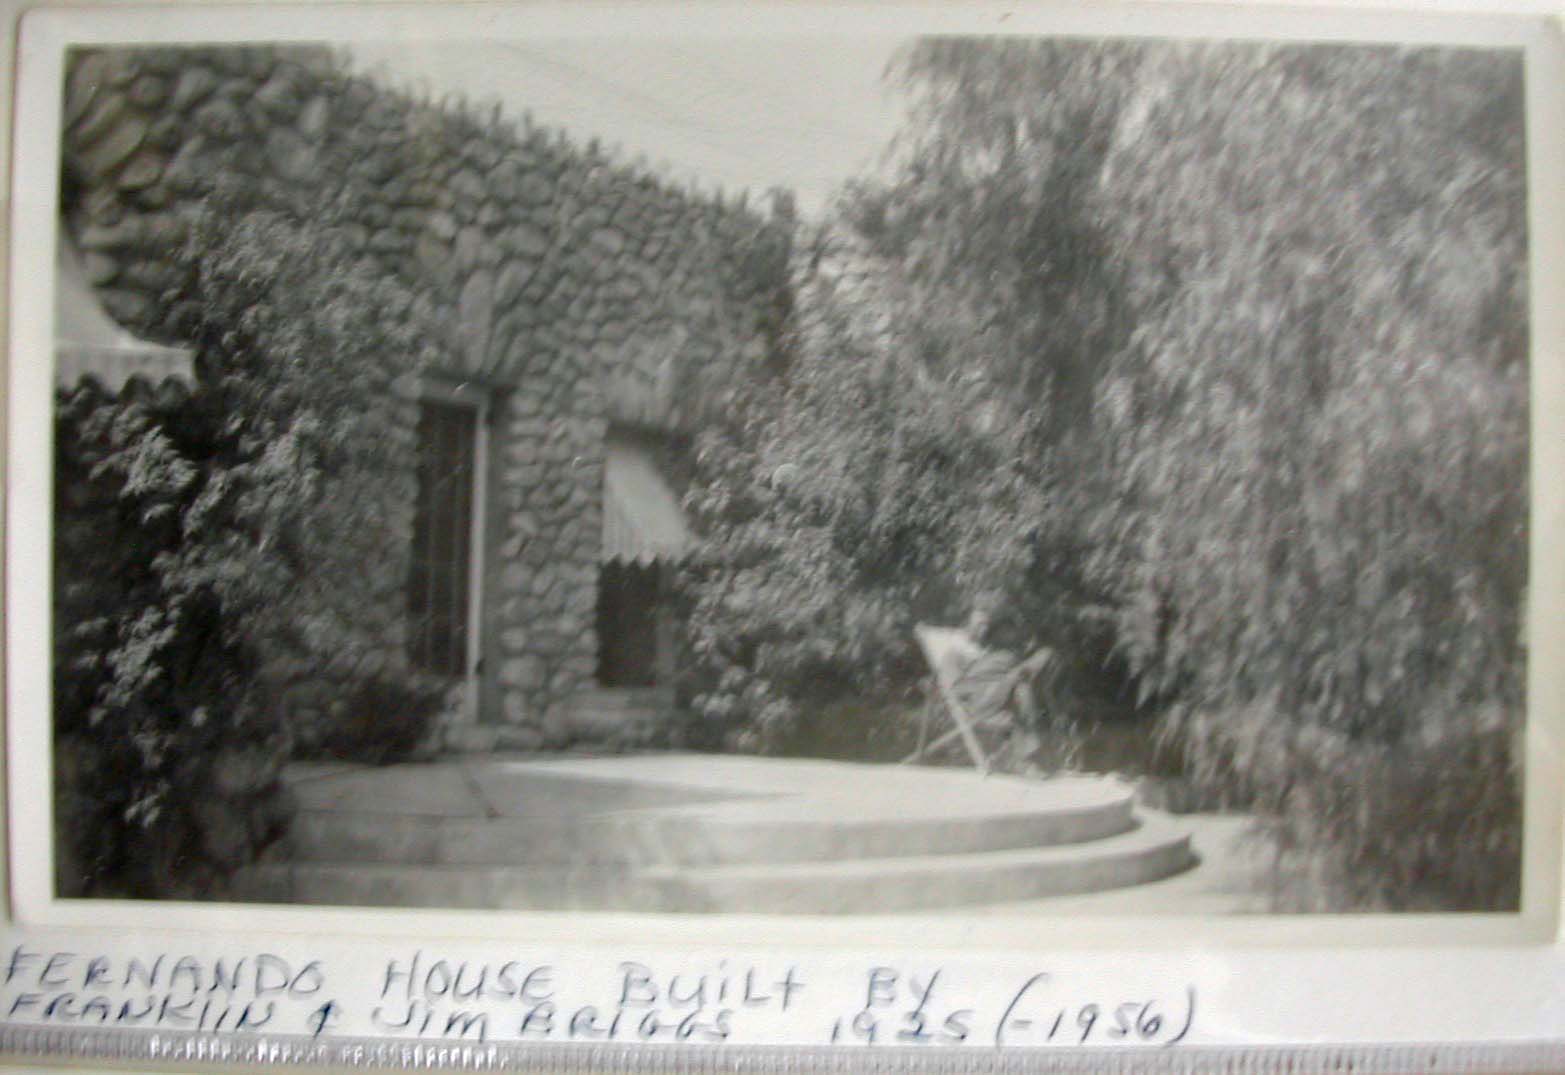 1940 San Fernando home*